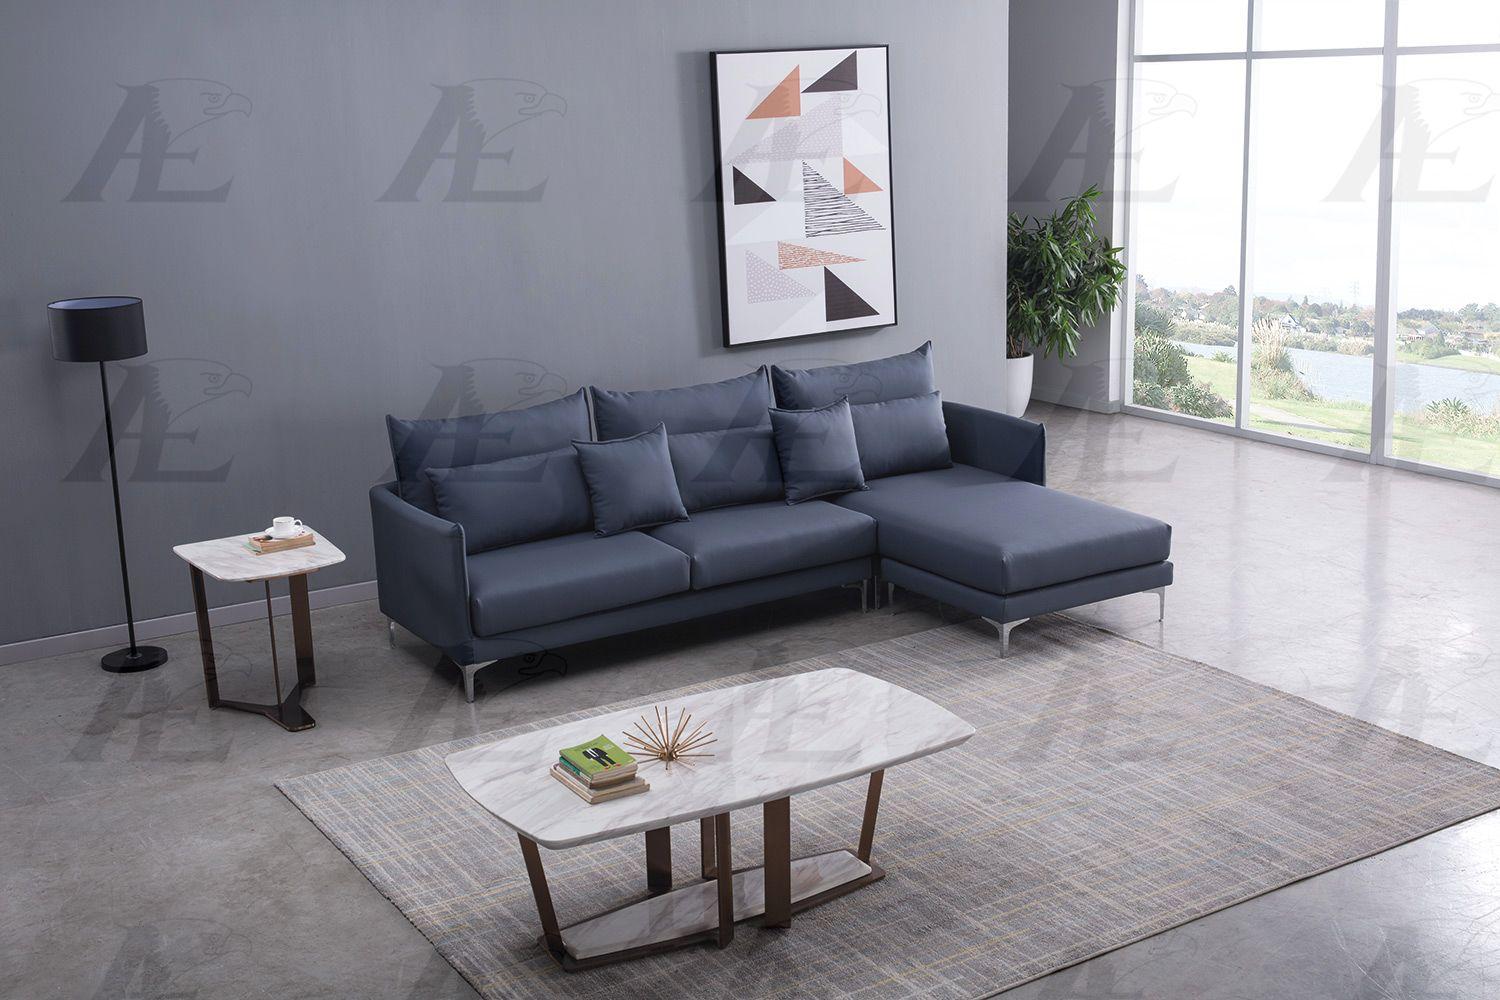 

    
American Eagle Furniture AE-L2375M-BGY Sectional Sofa Cobalt blue AE-L2375M-BGY
